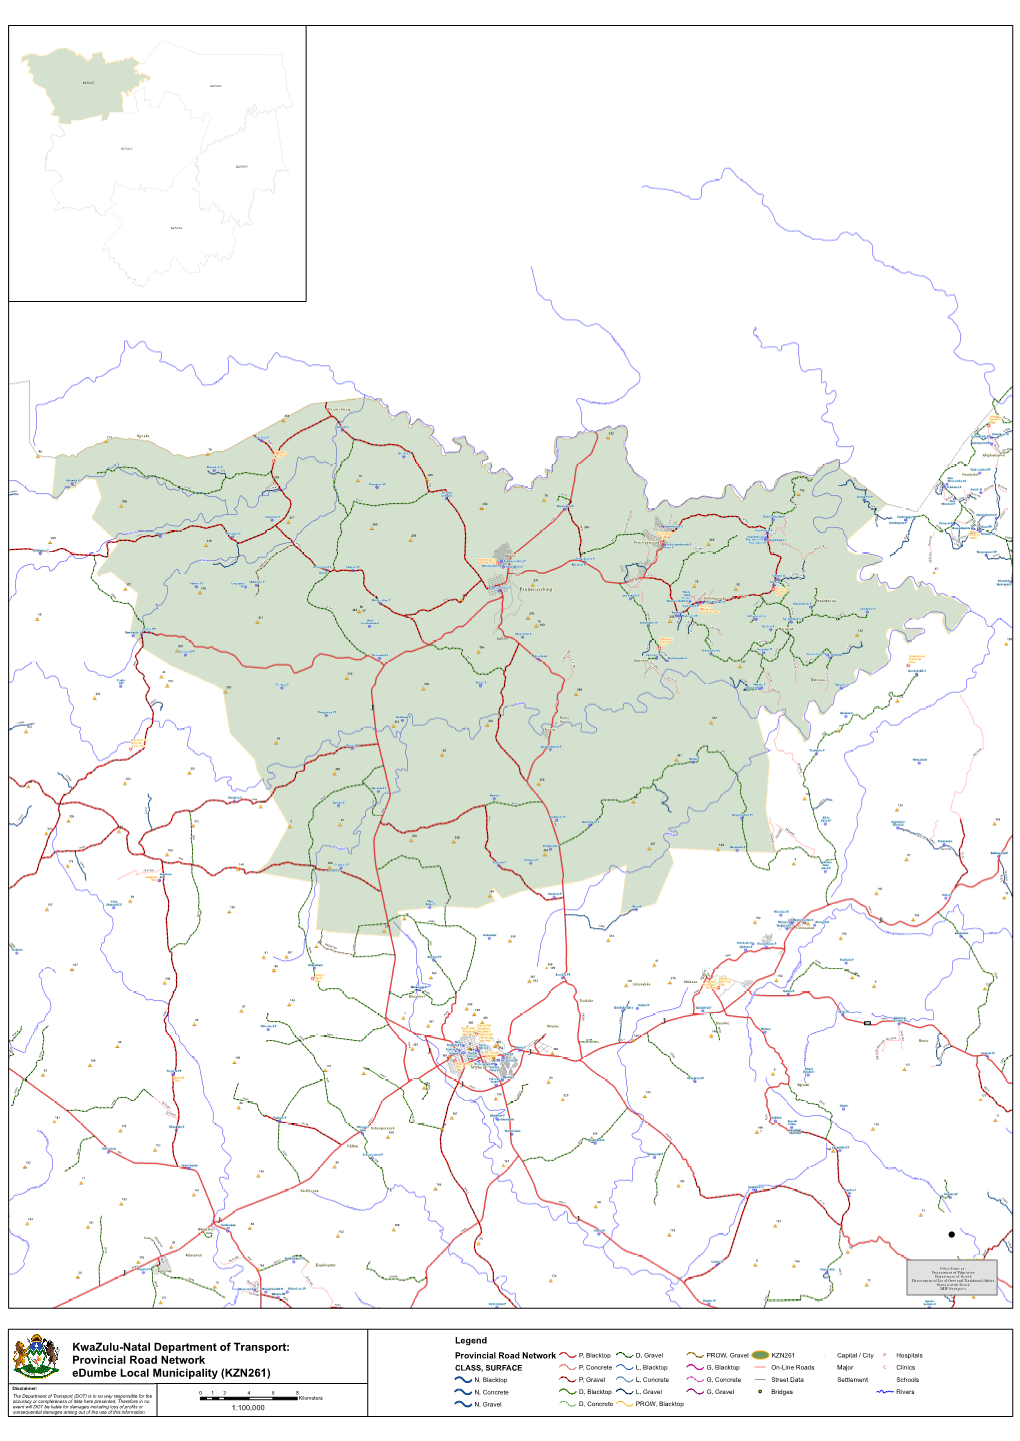 Provincial Road Network Edumbe Local Municipality (KZN261)